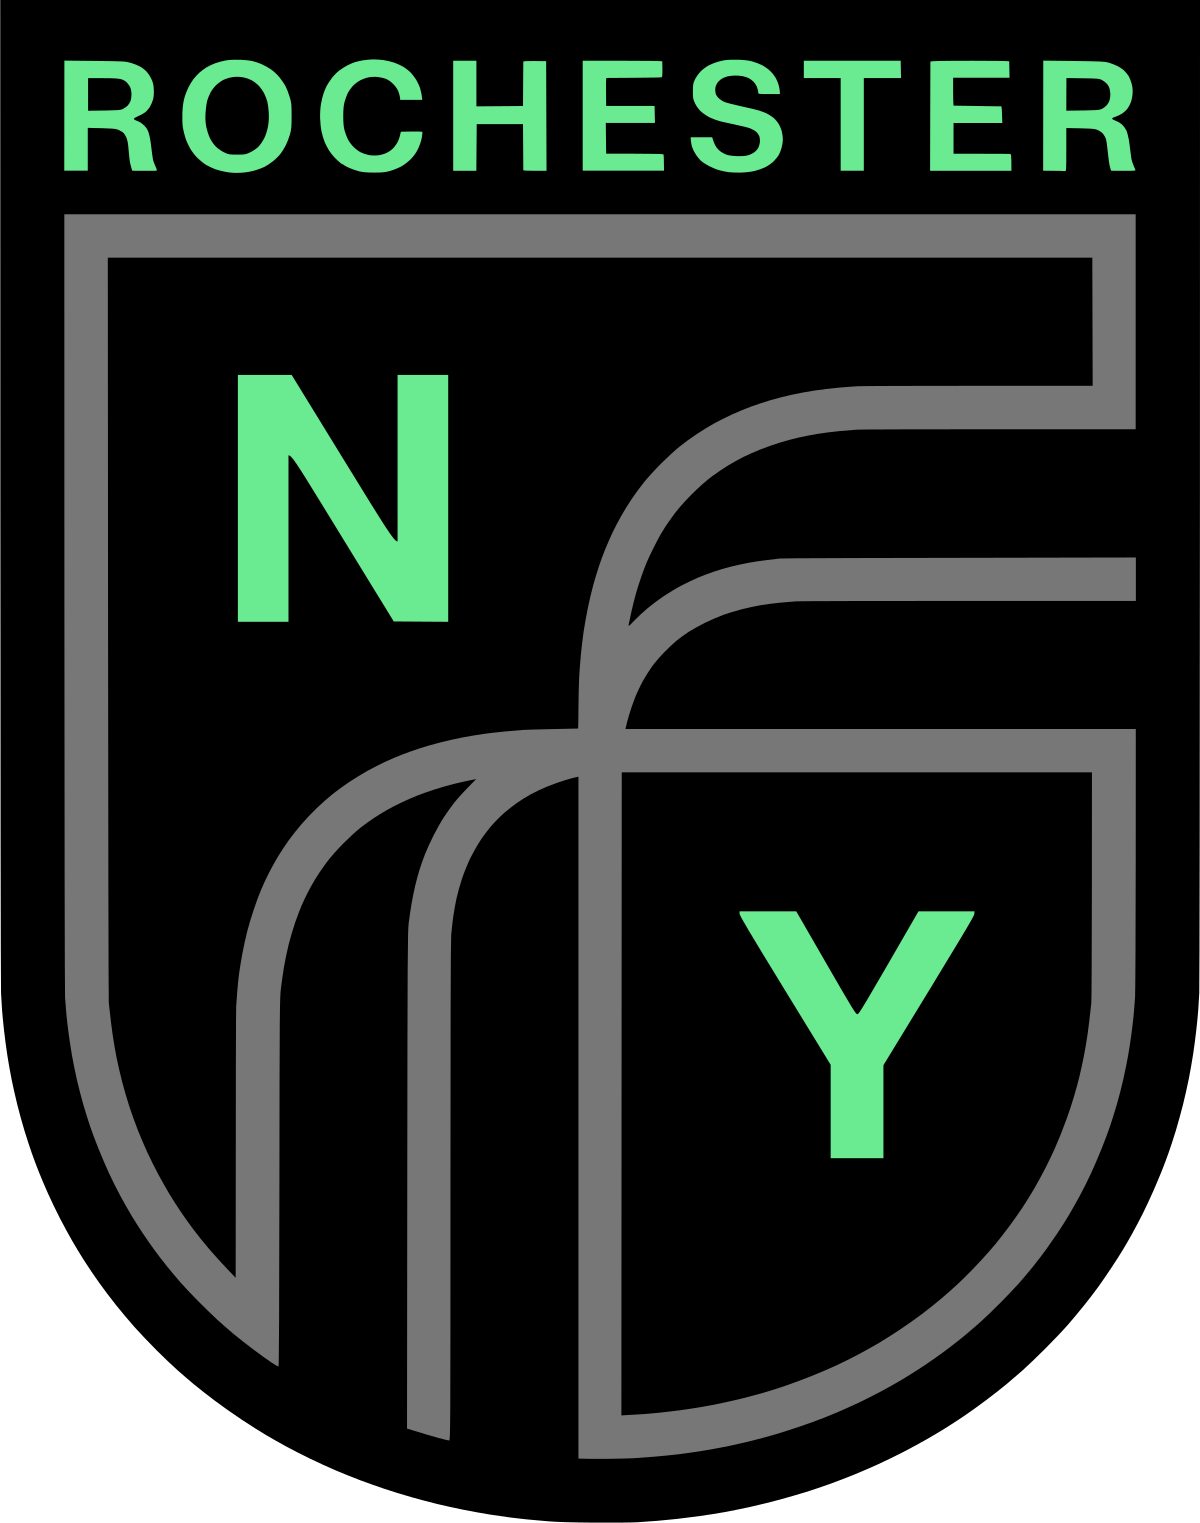 Rochester NYFC Logo